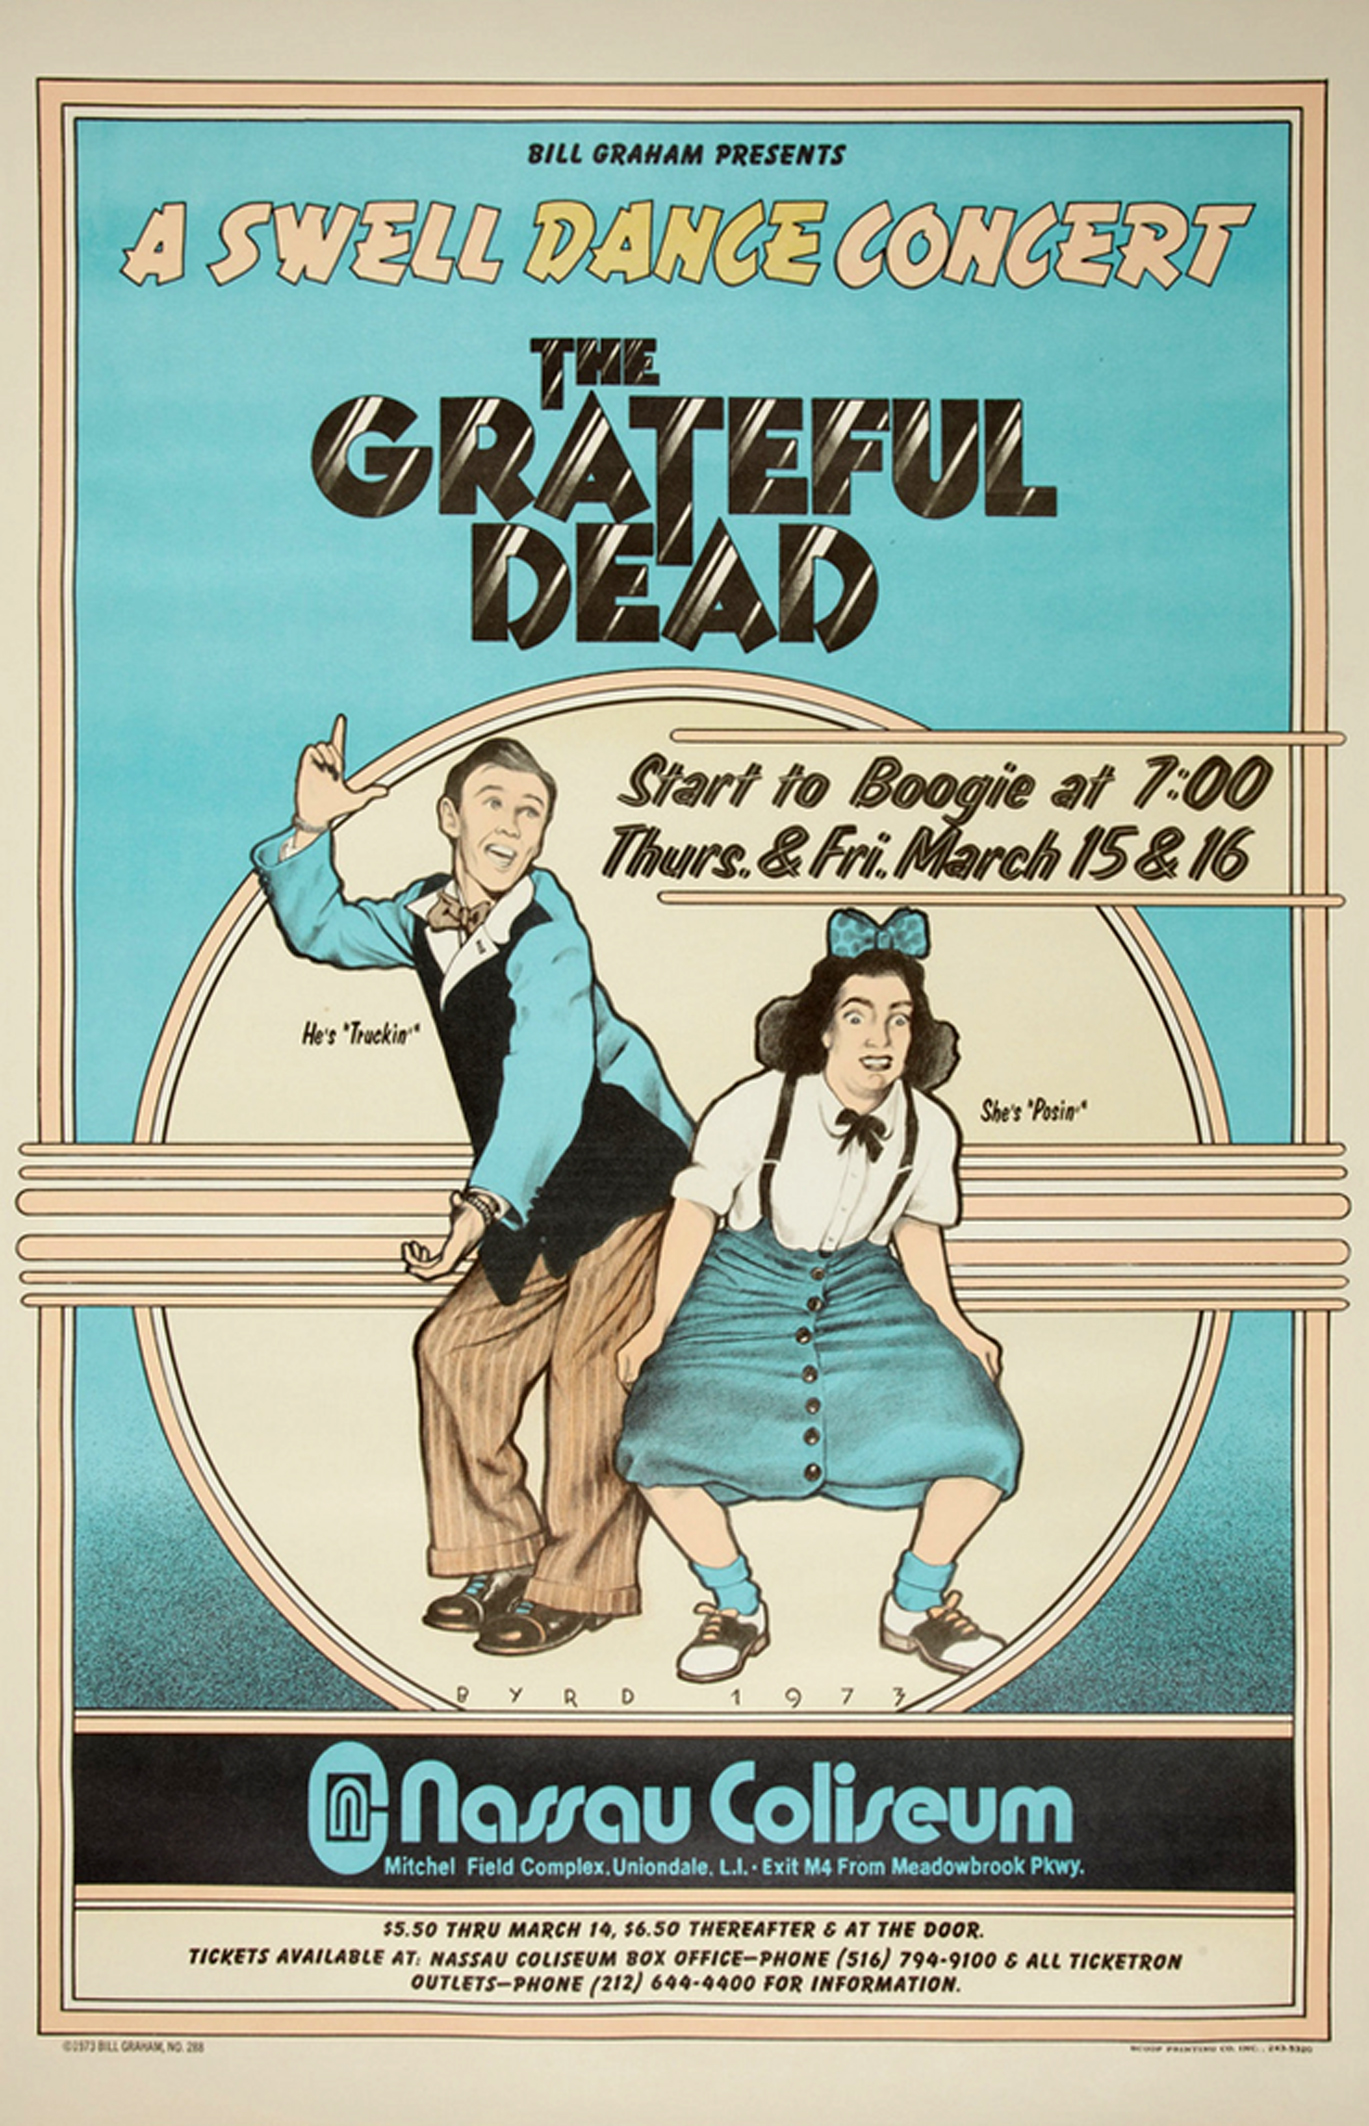 Grateful Dead 1973 Ii